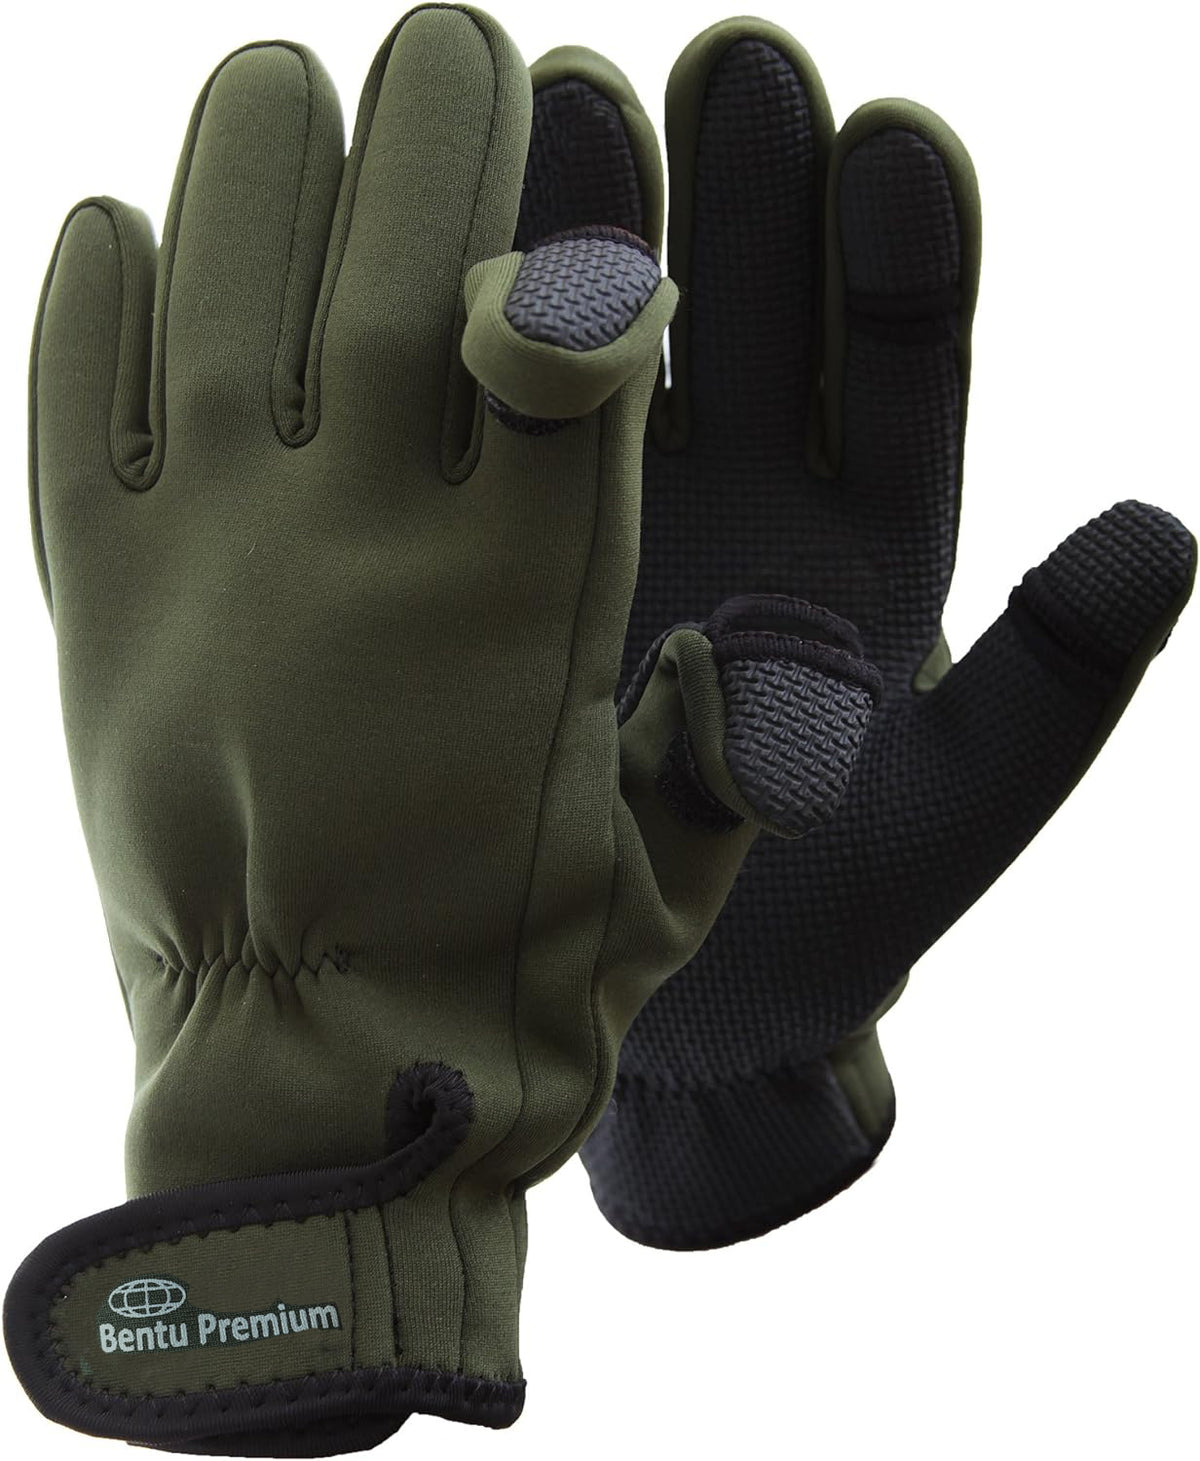 Bentu Premium Neoprene Gloves